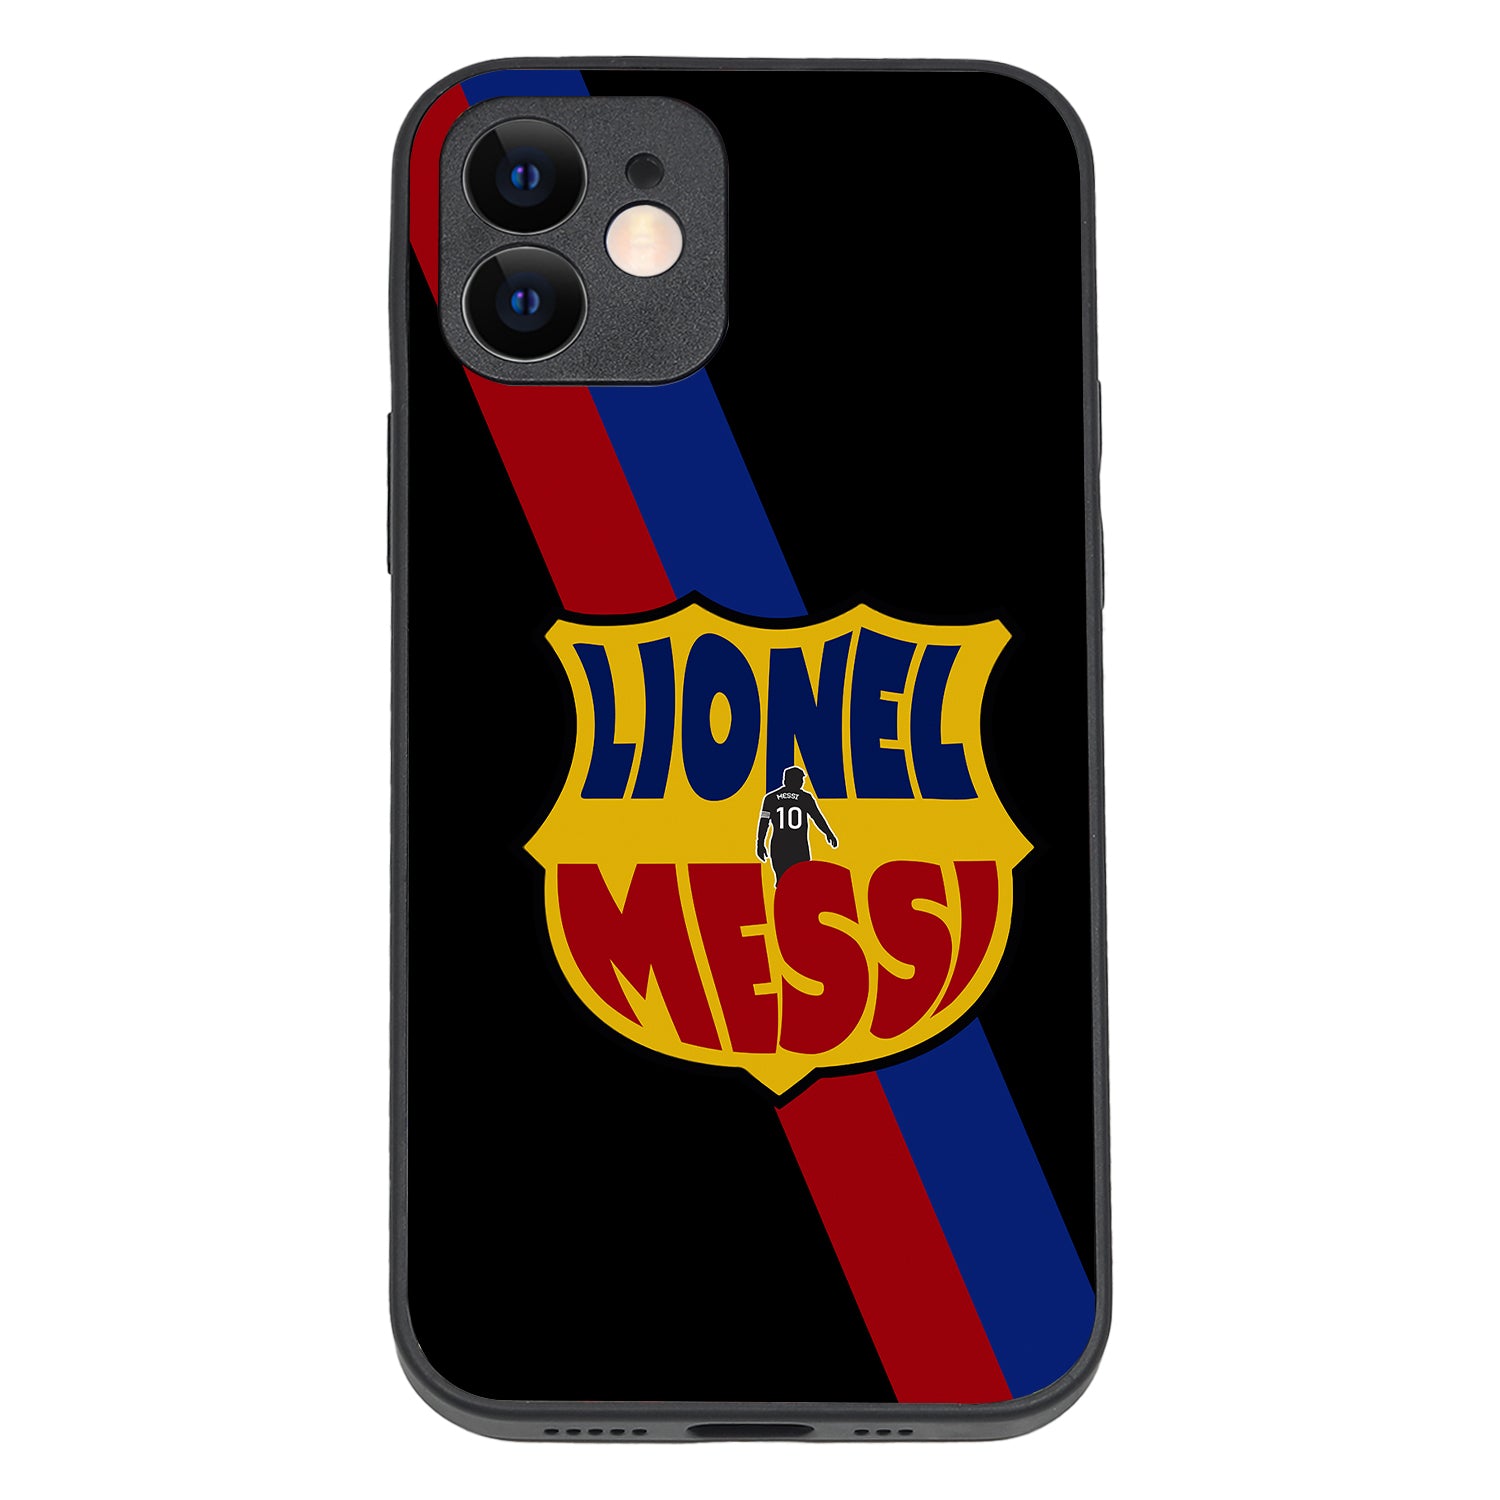 Lionel Messi Sports iPhone 12 Case